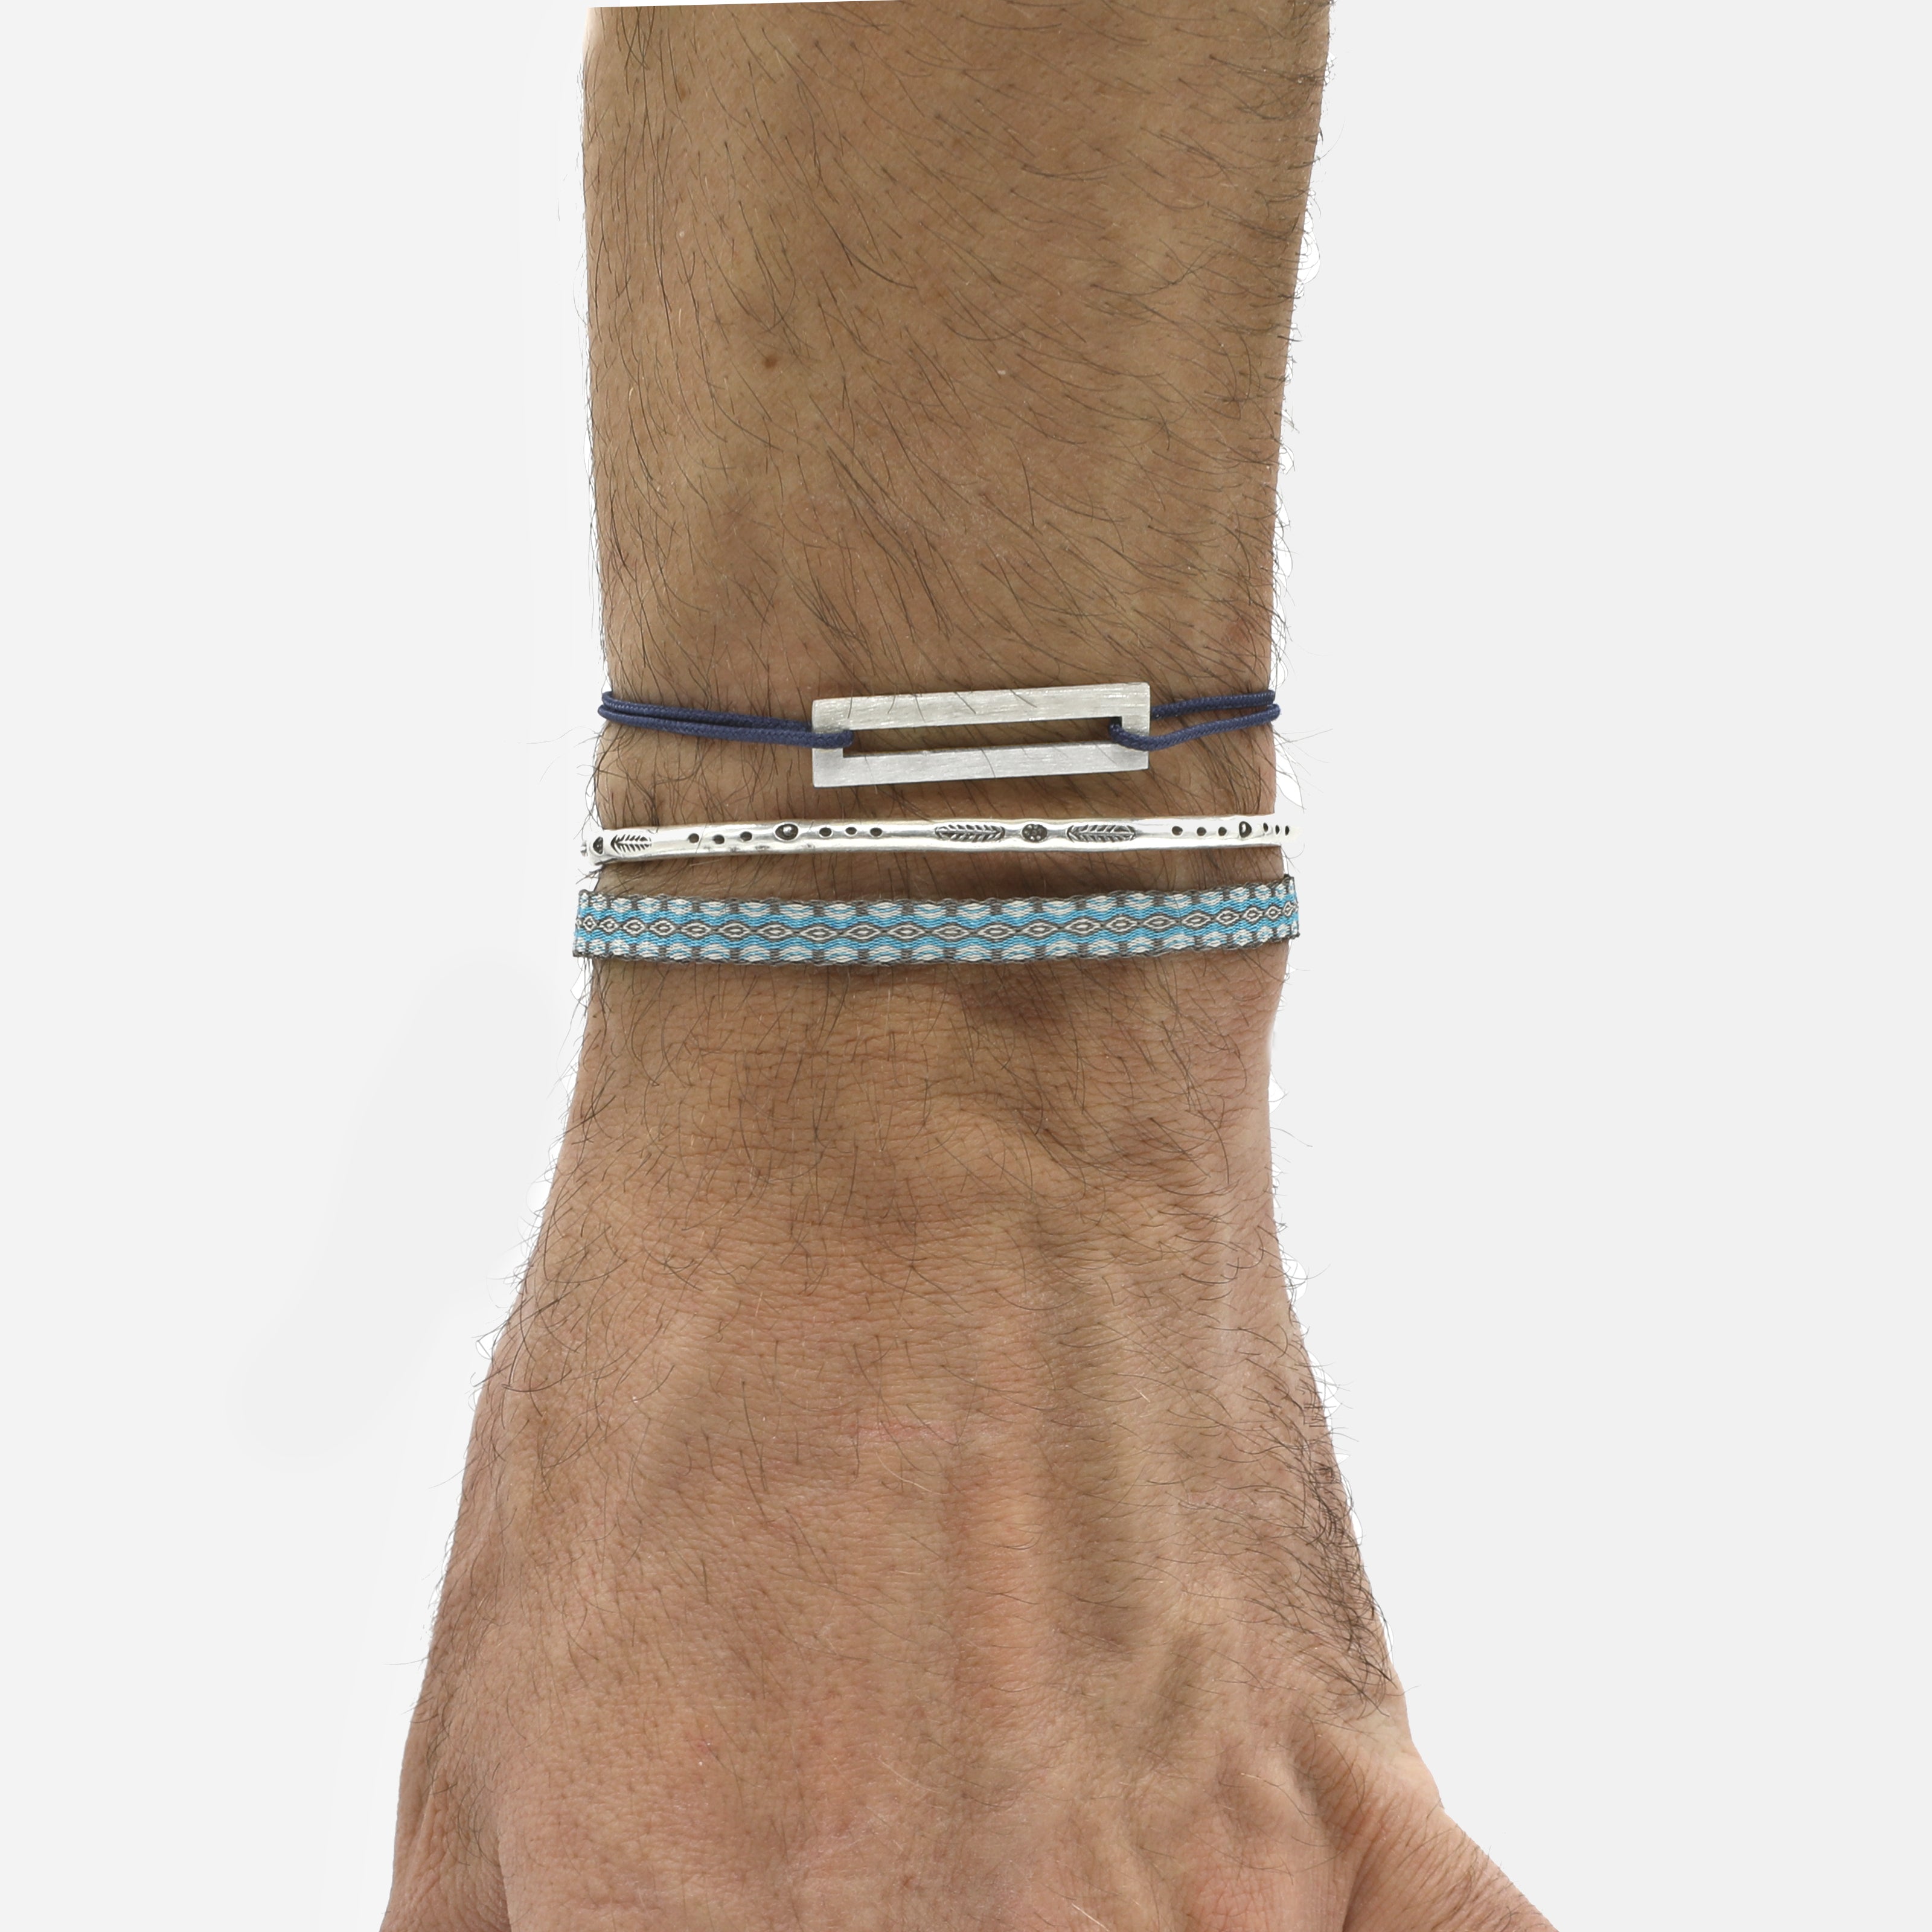 Rope Bracelet With Sterling Silver Bar (Ocean Blue)-Jewelry-Kompsós